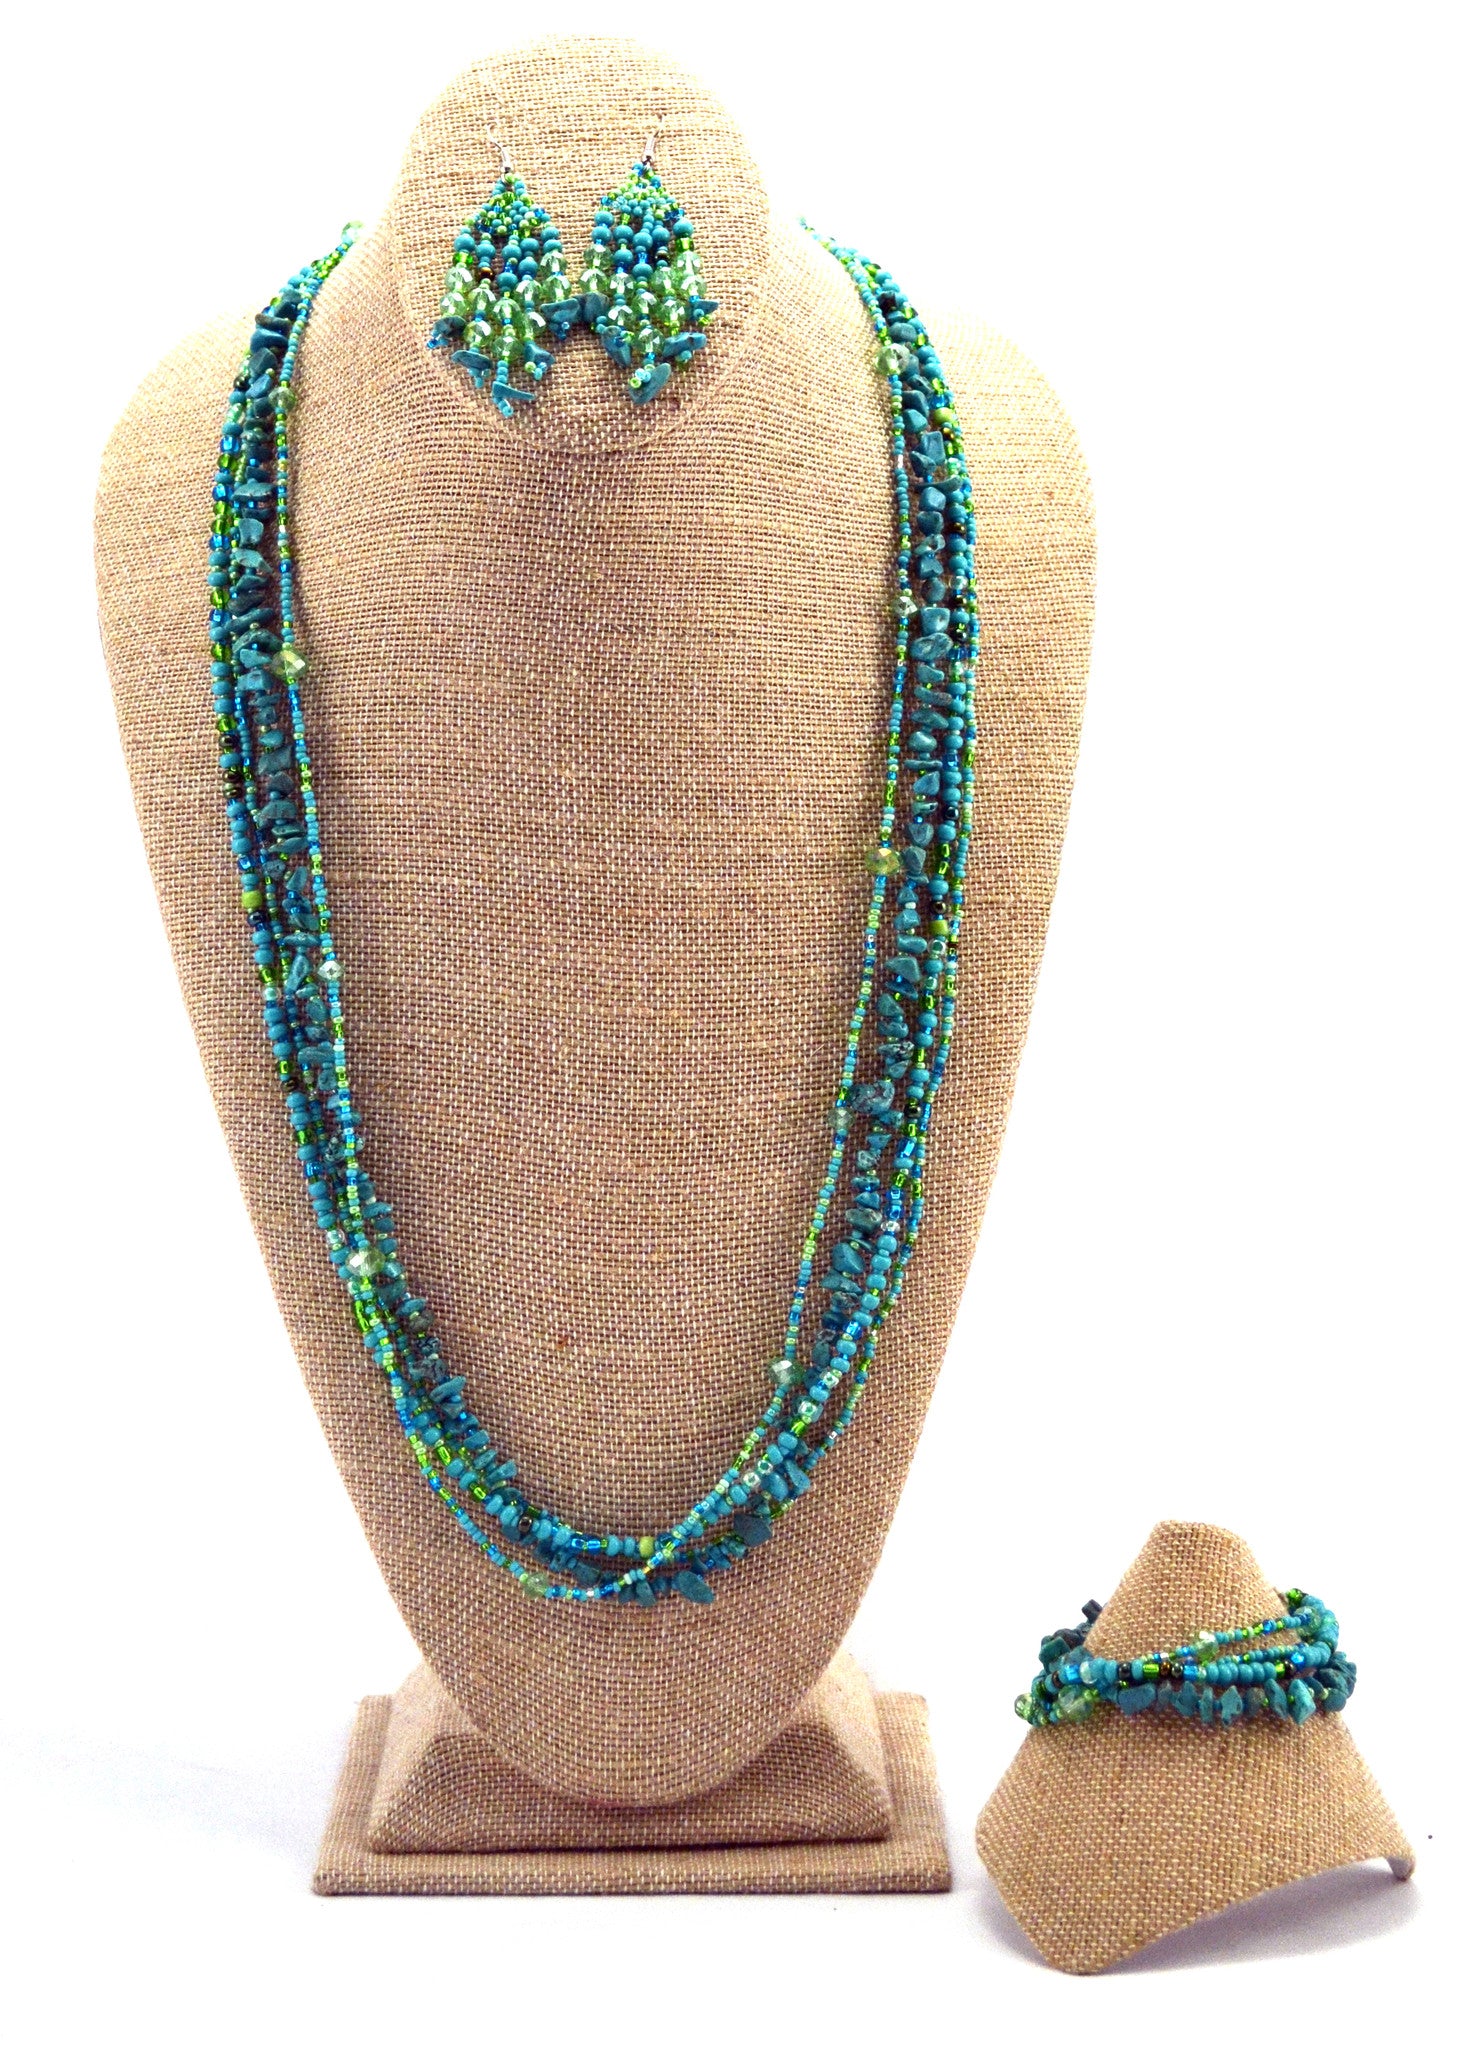 Lucia's World Emporium Fair Trade Handmade Guatemalan Beaded Four Strand Rock Candy Bracelet set in turquoise